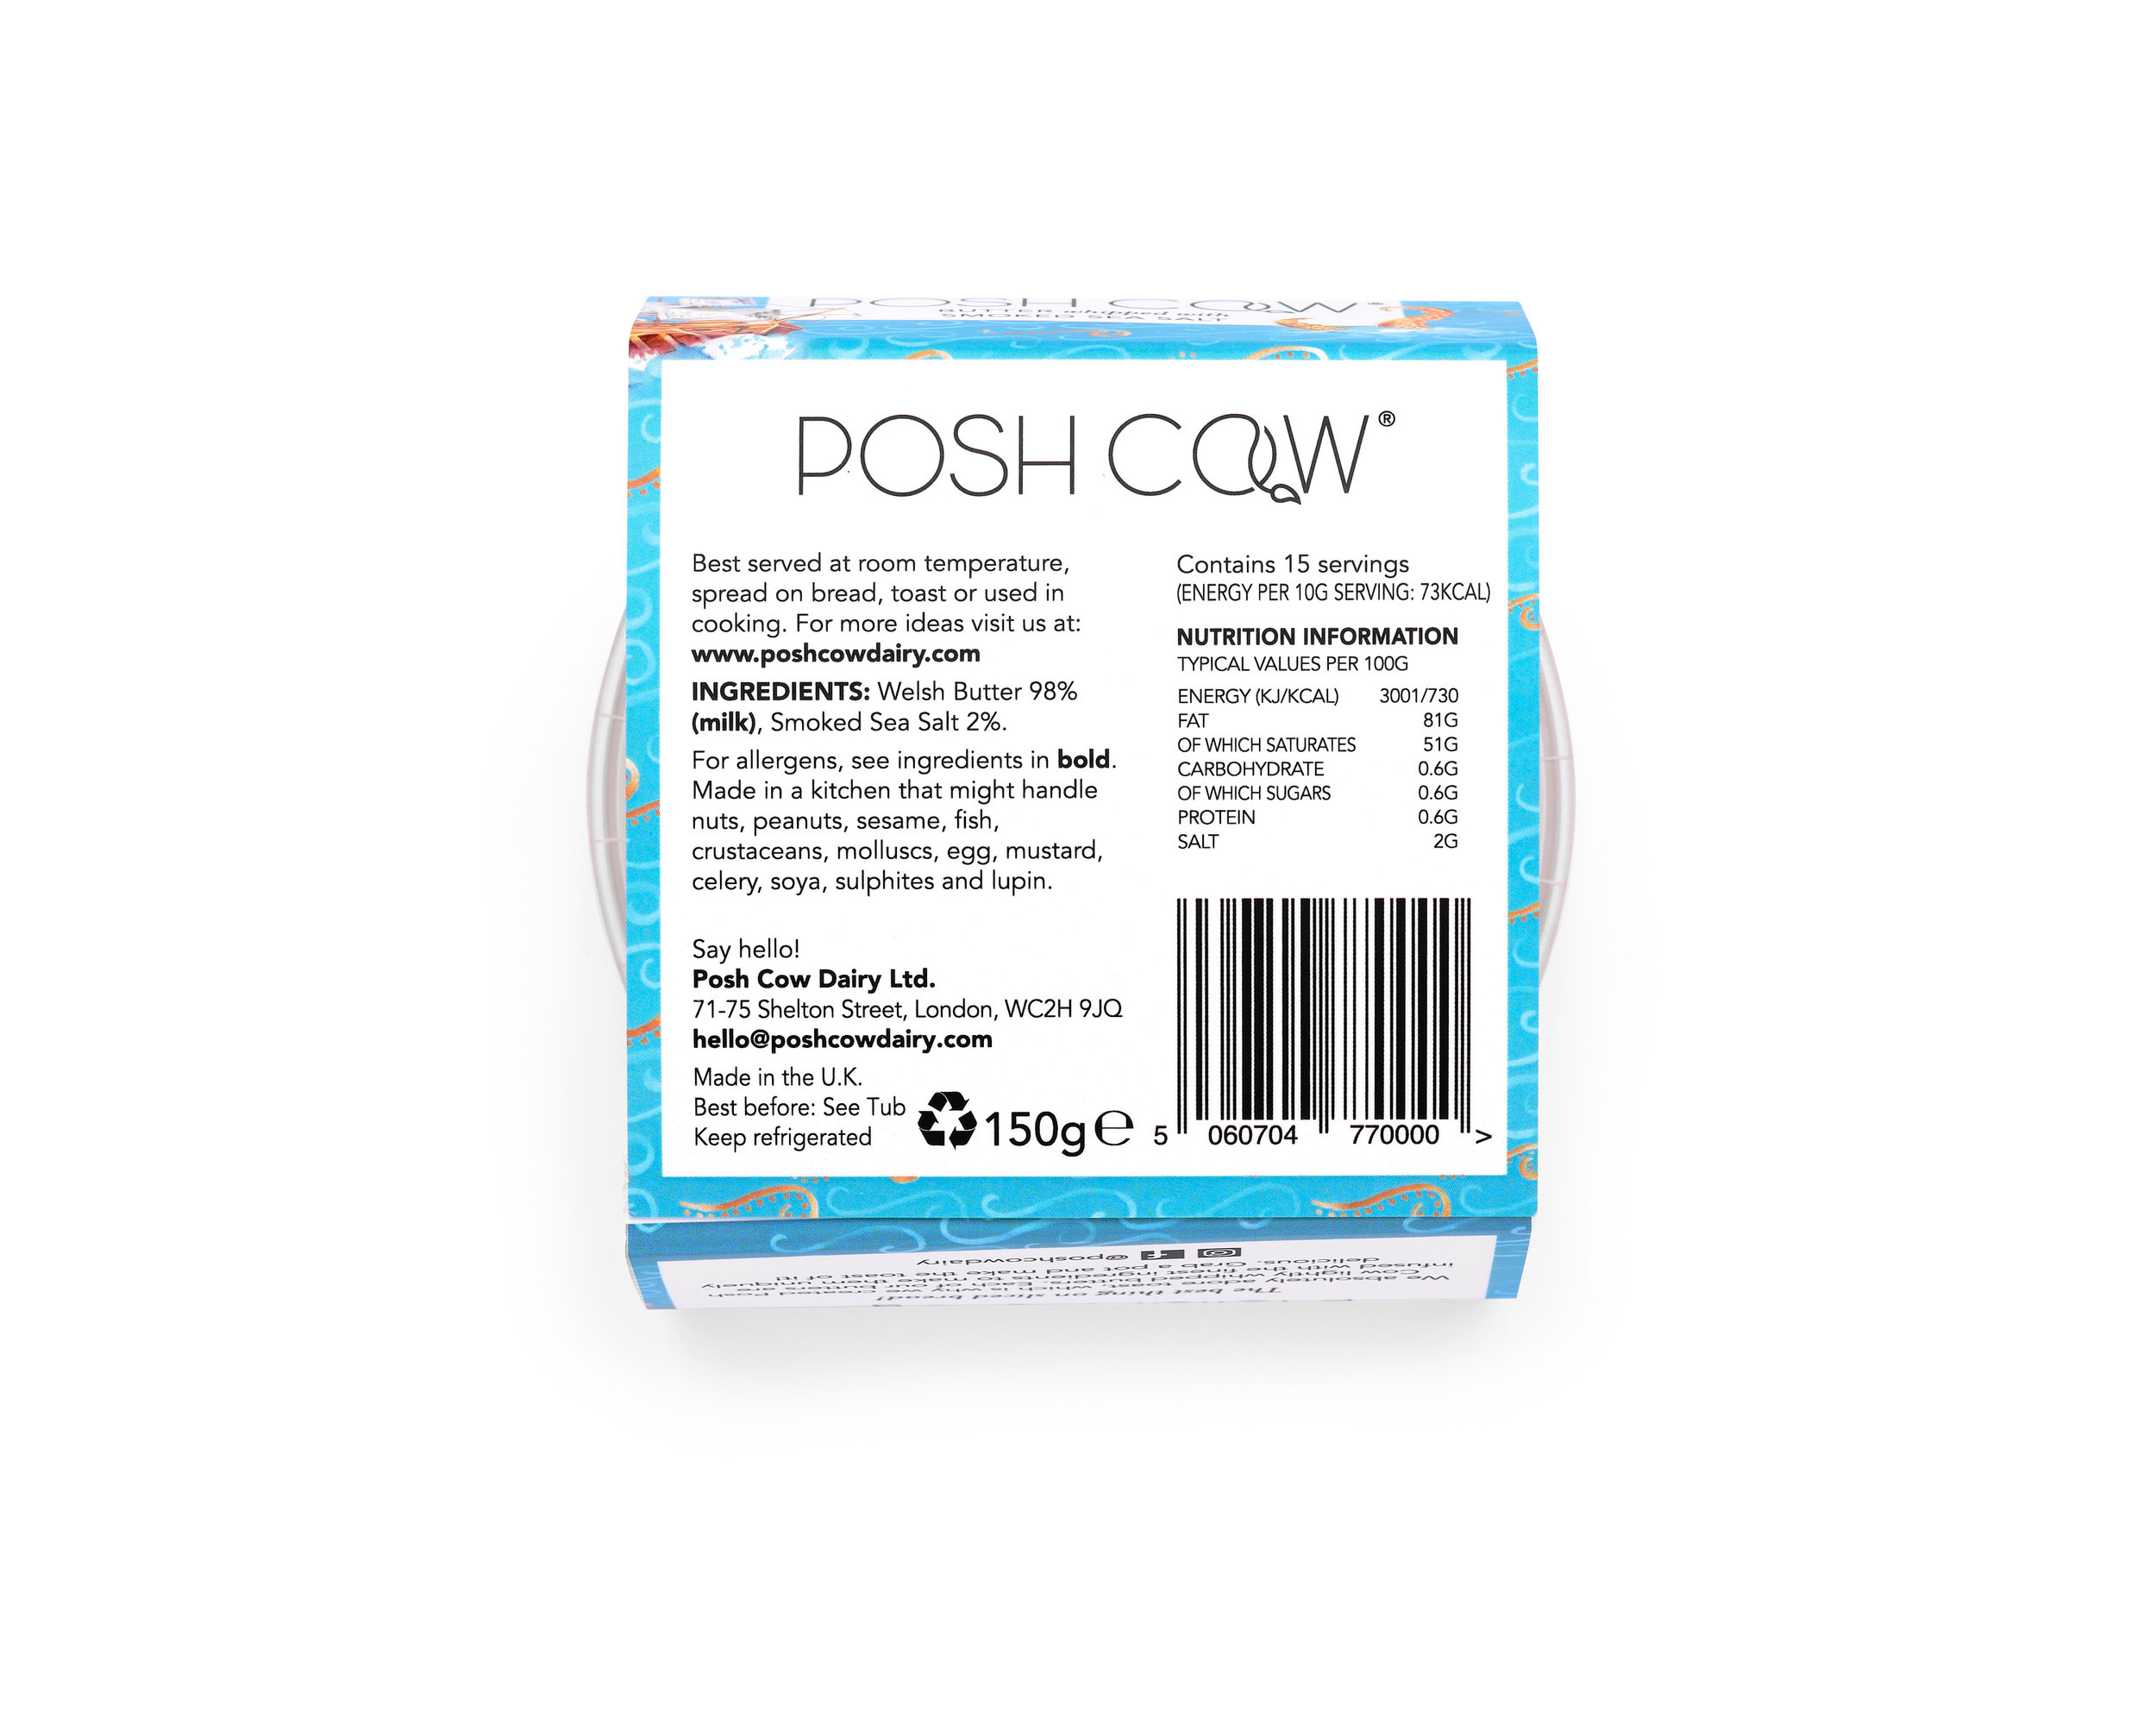 Posh Cow Smoked Sea Salt Ingredients